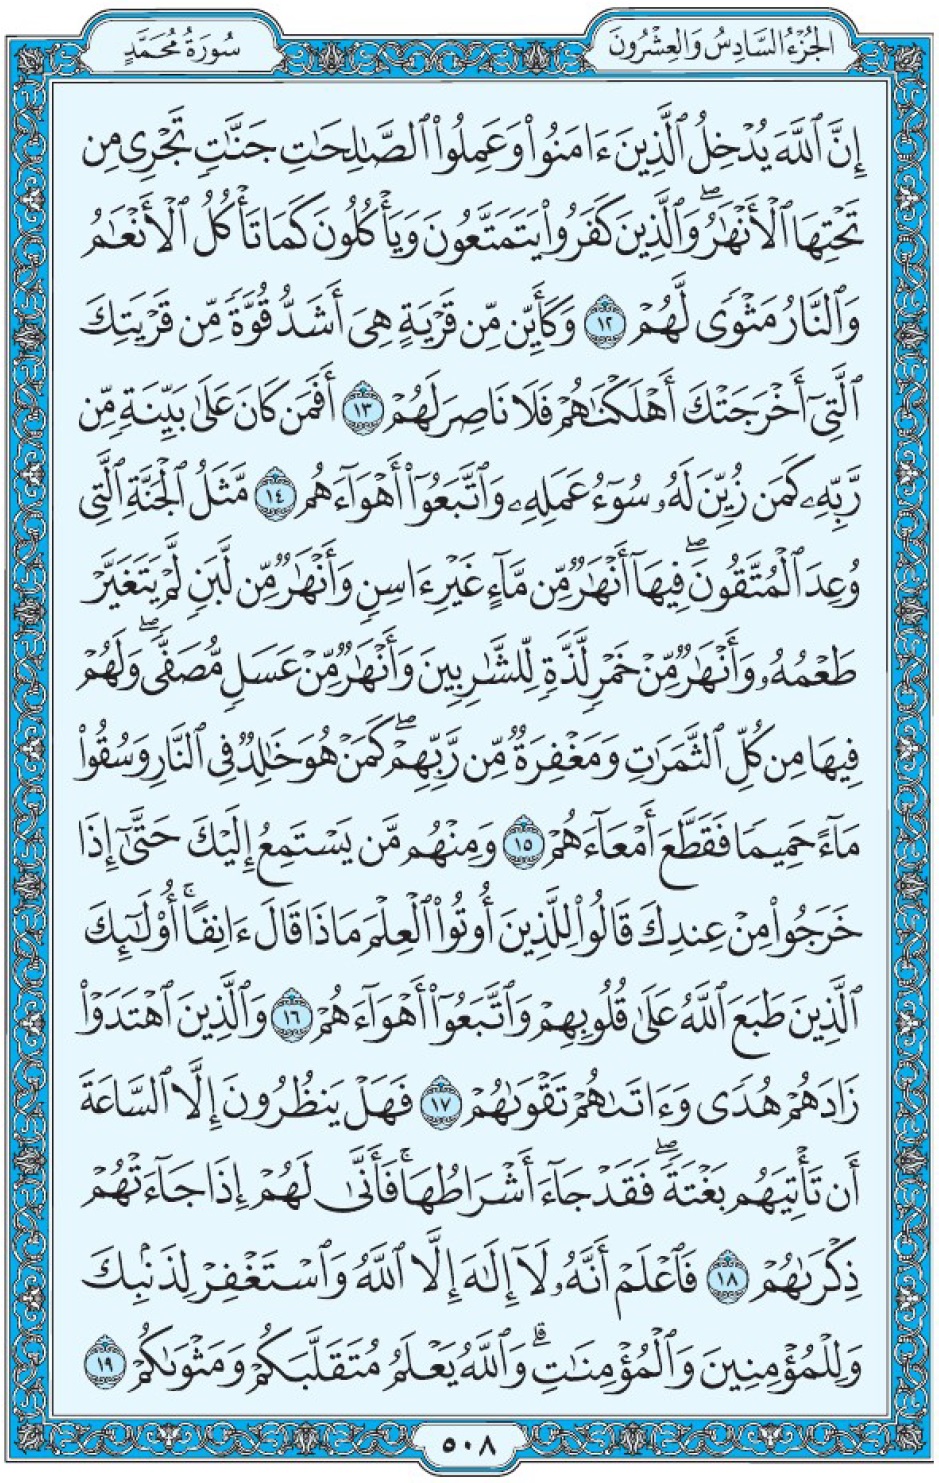 Коран Мединский мусхаф страница 508, Мухаммад, аят 12-19